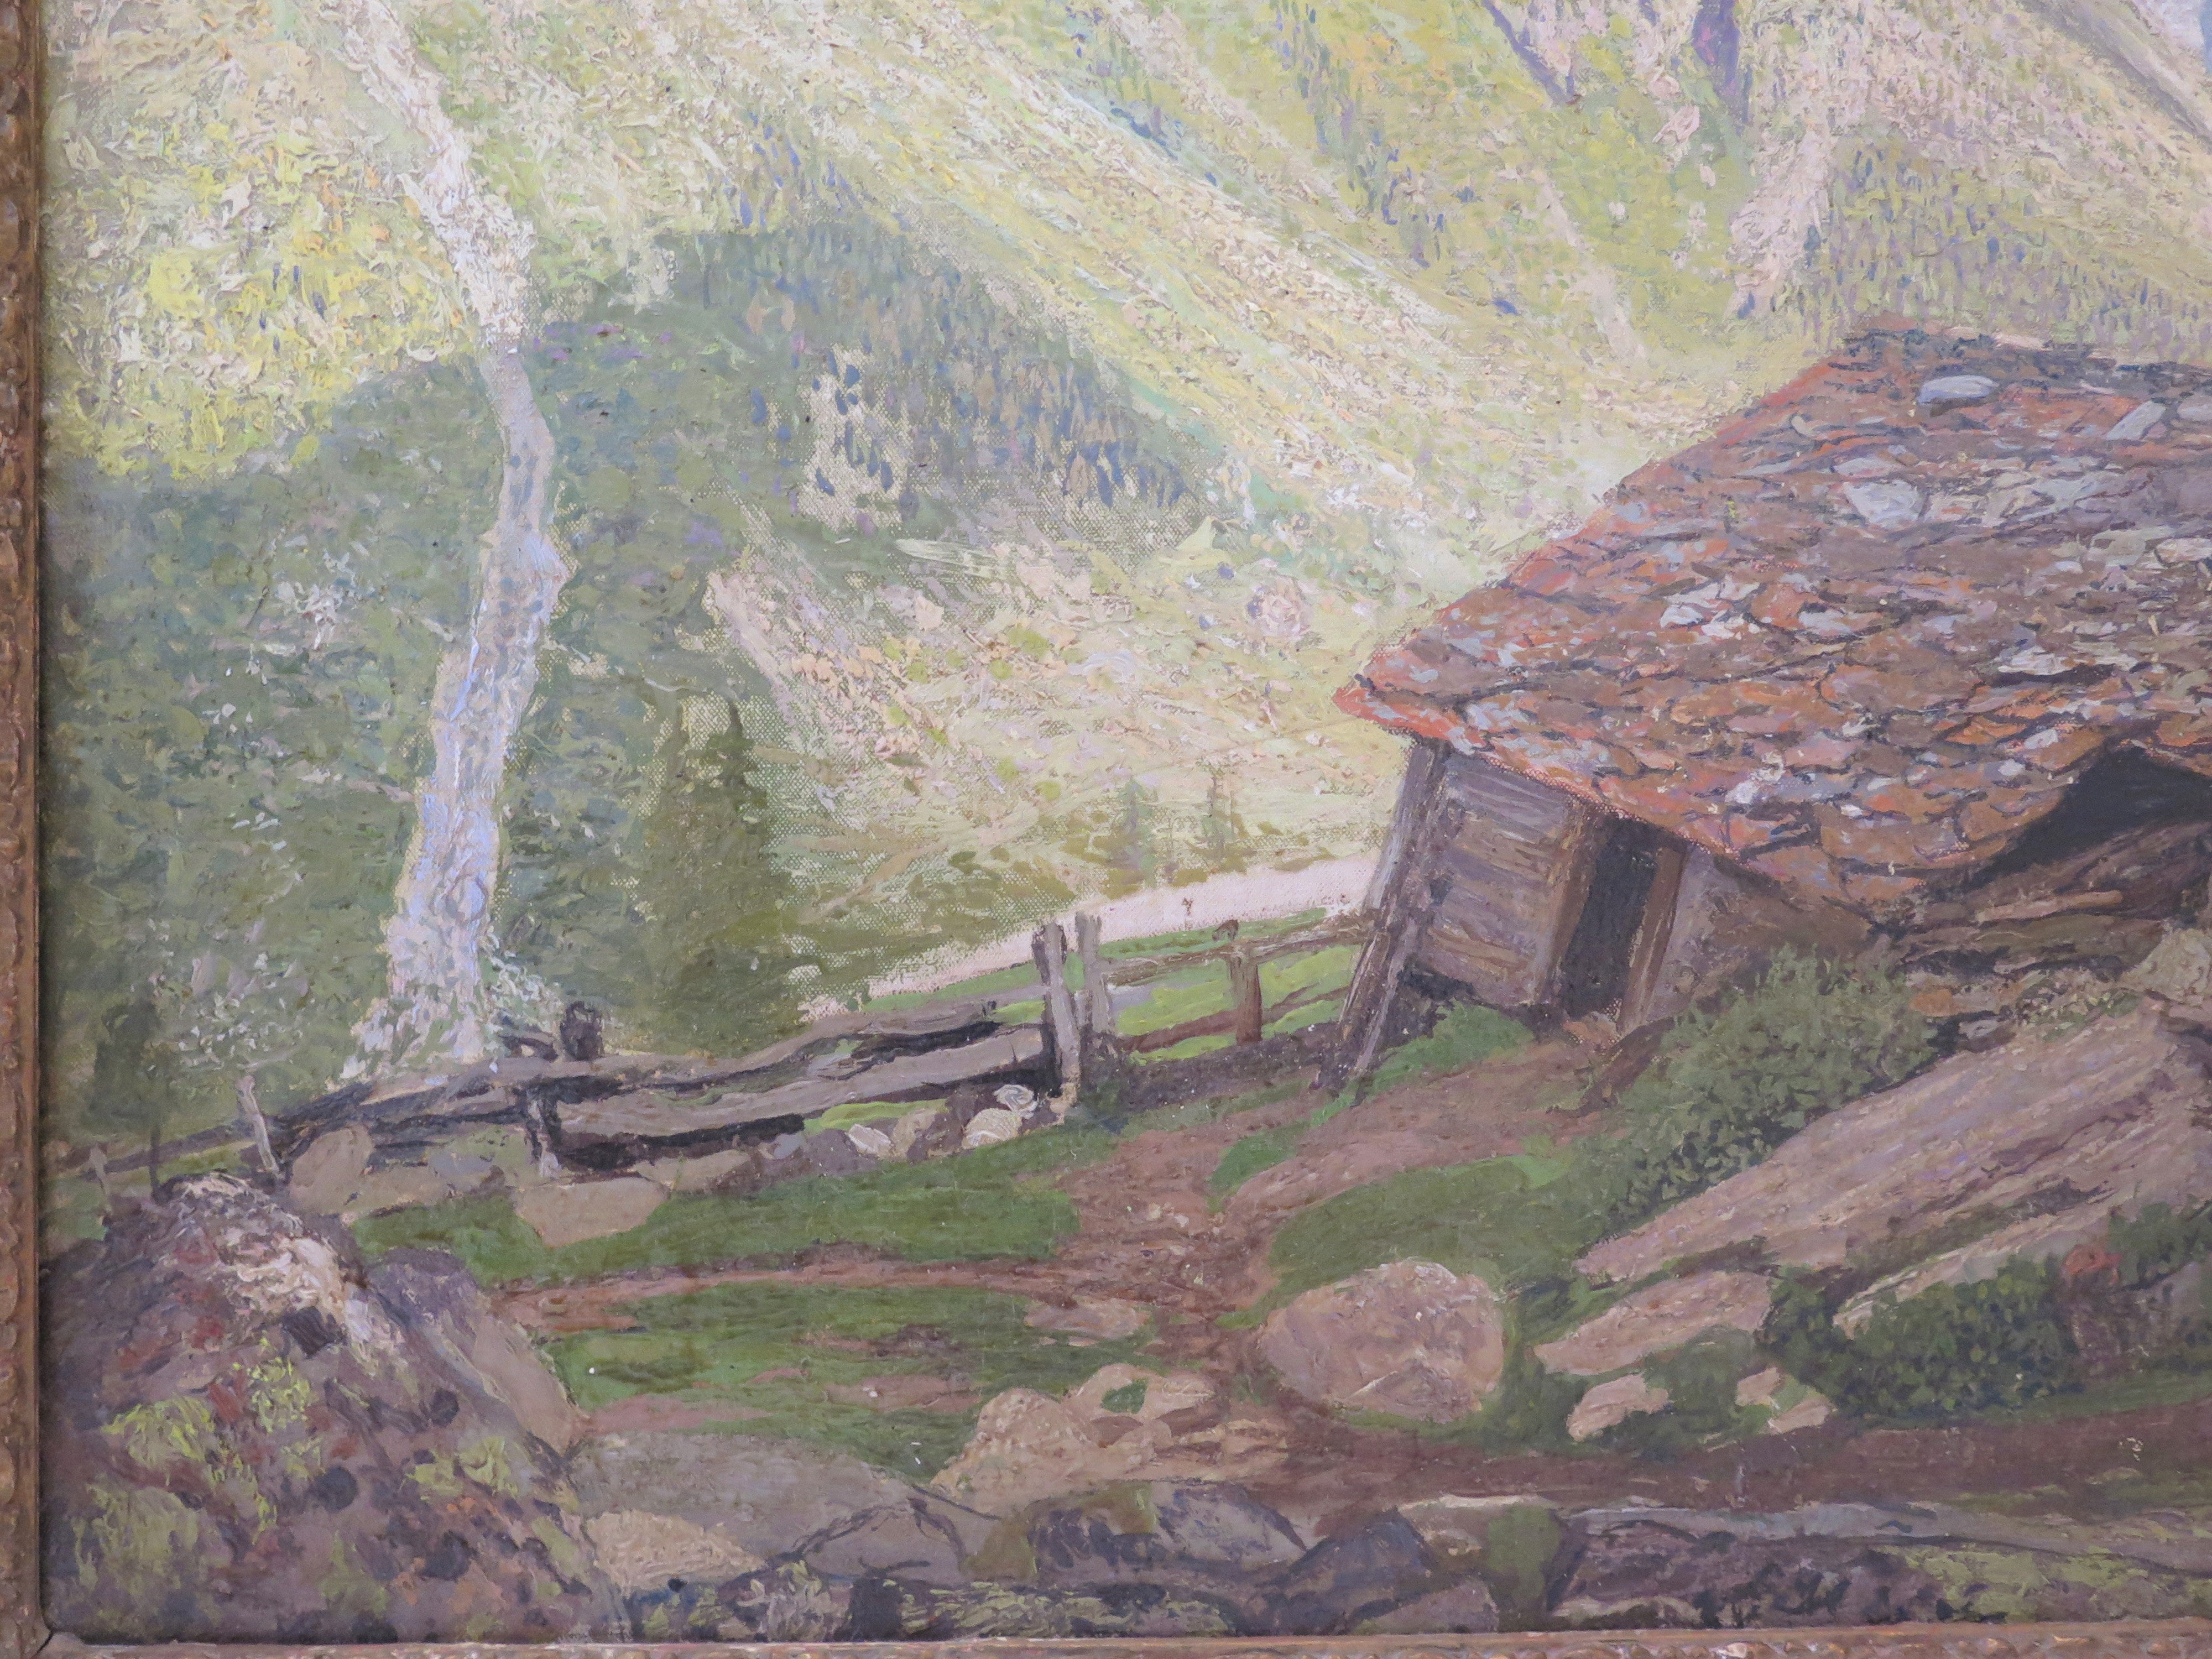 A Swiss Mountain Landscape by Sydney Lee (English, 1866-1949)